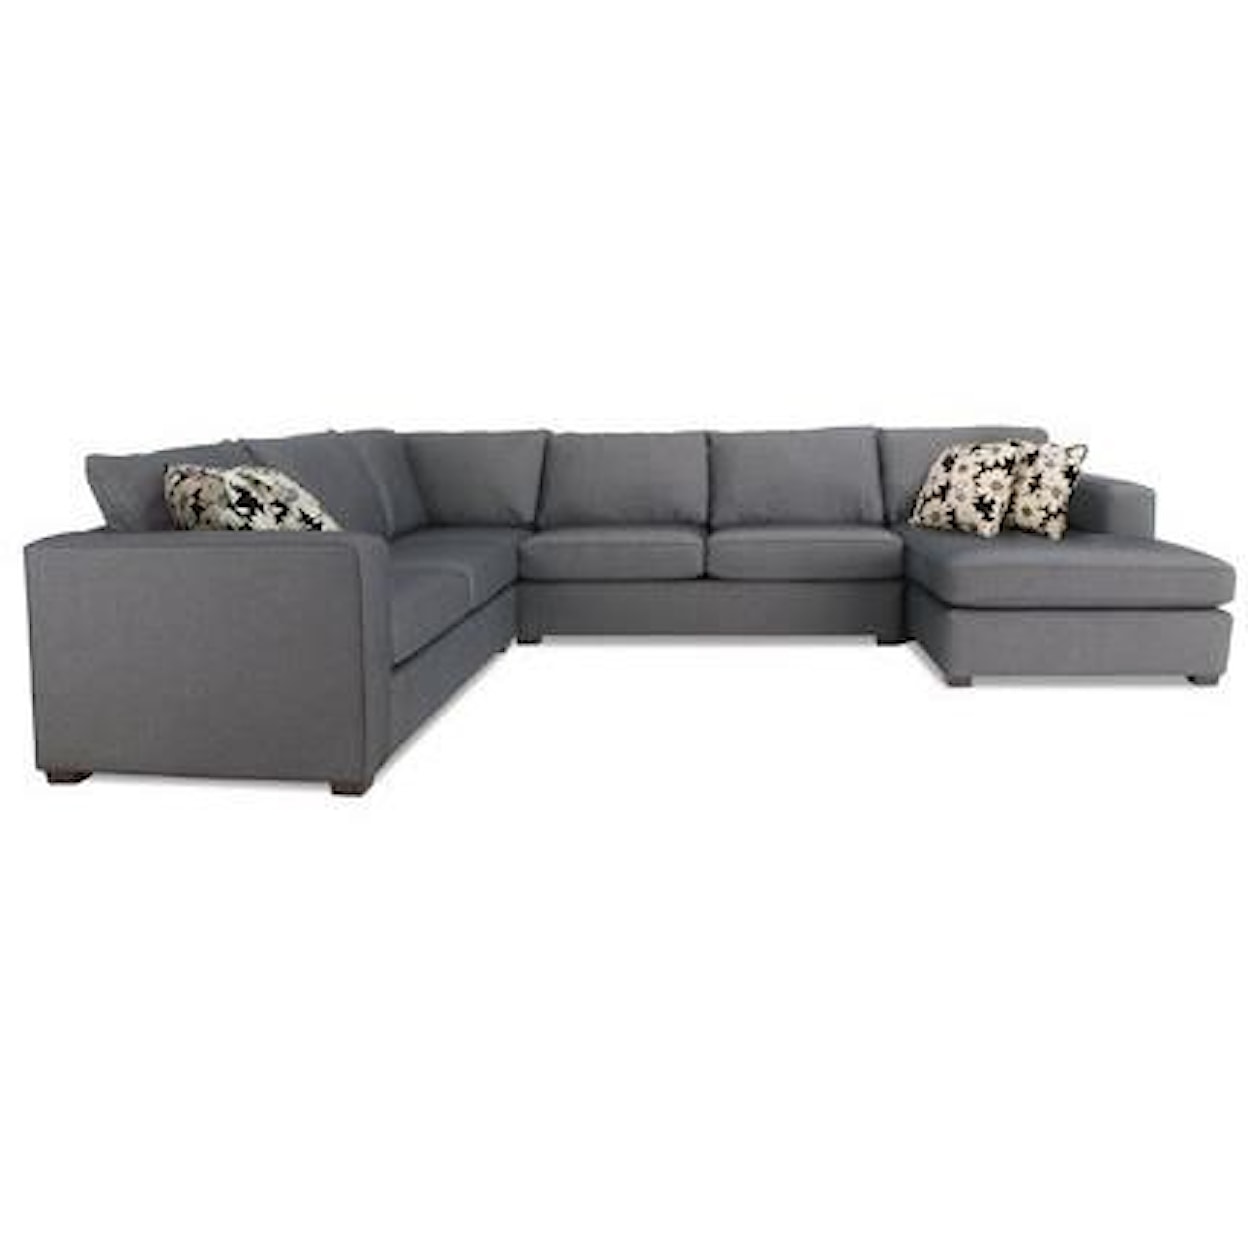 Decor-Rest 2900 Sectional Sofa